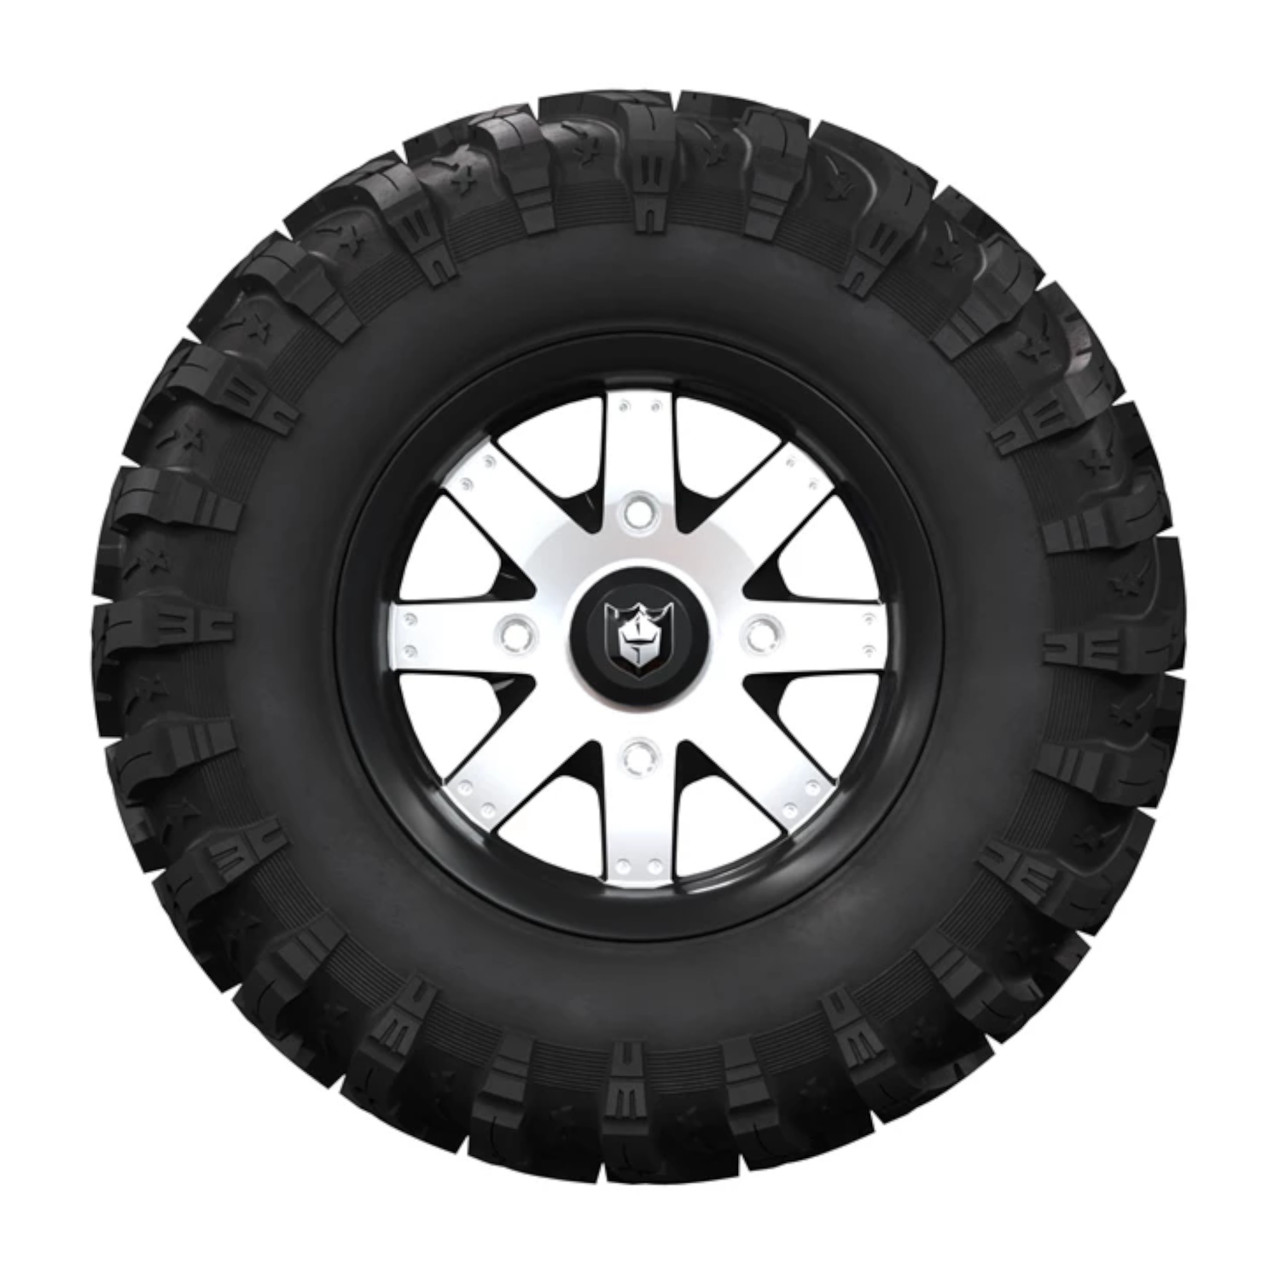 Polaris New OEM Pro Armor Wheel & Tire Set: X Terrain, 27 Inch Diameter, 2889966